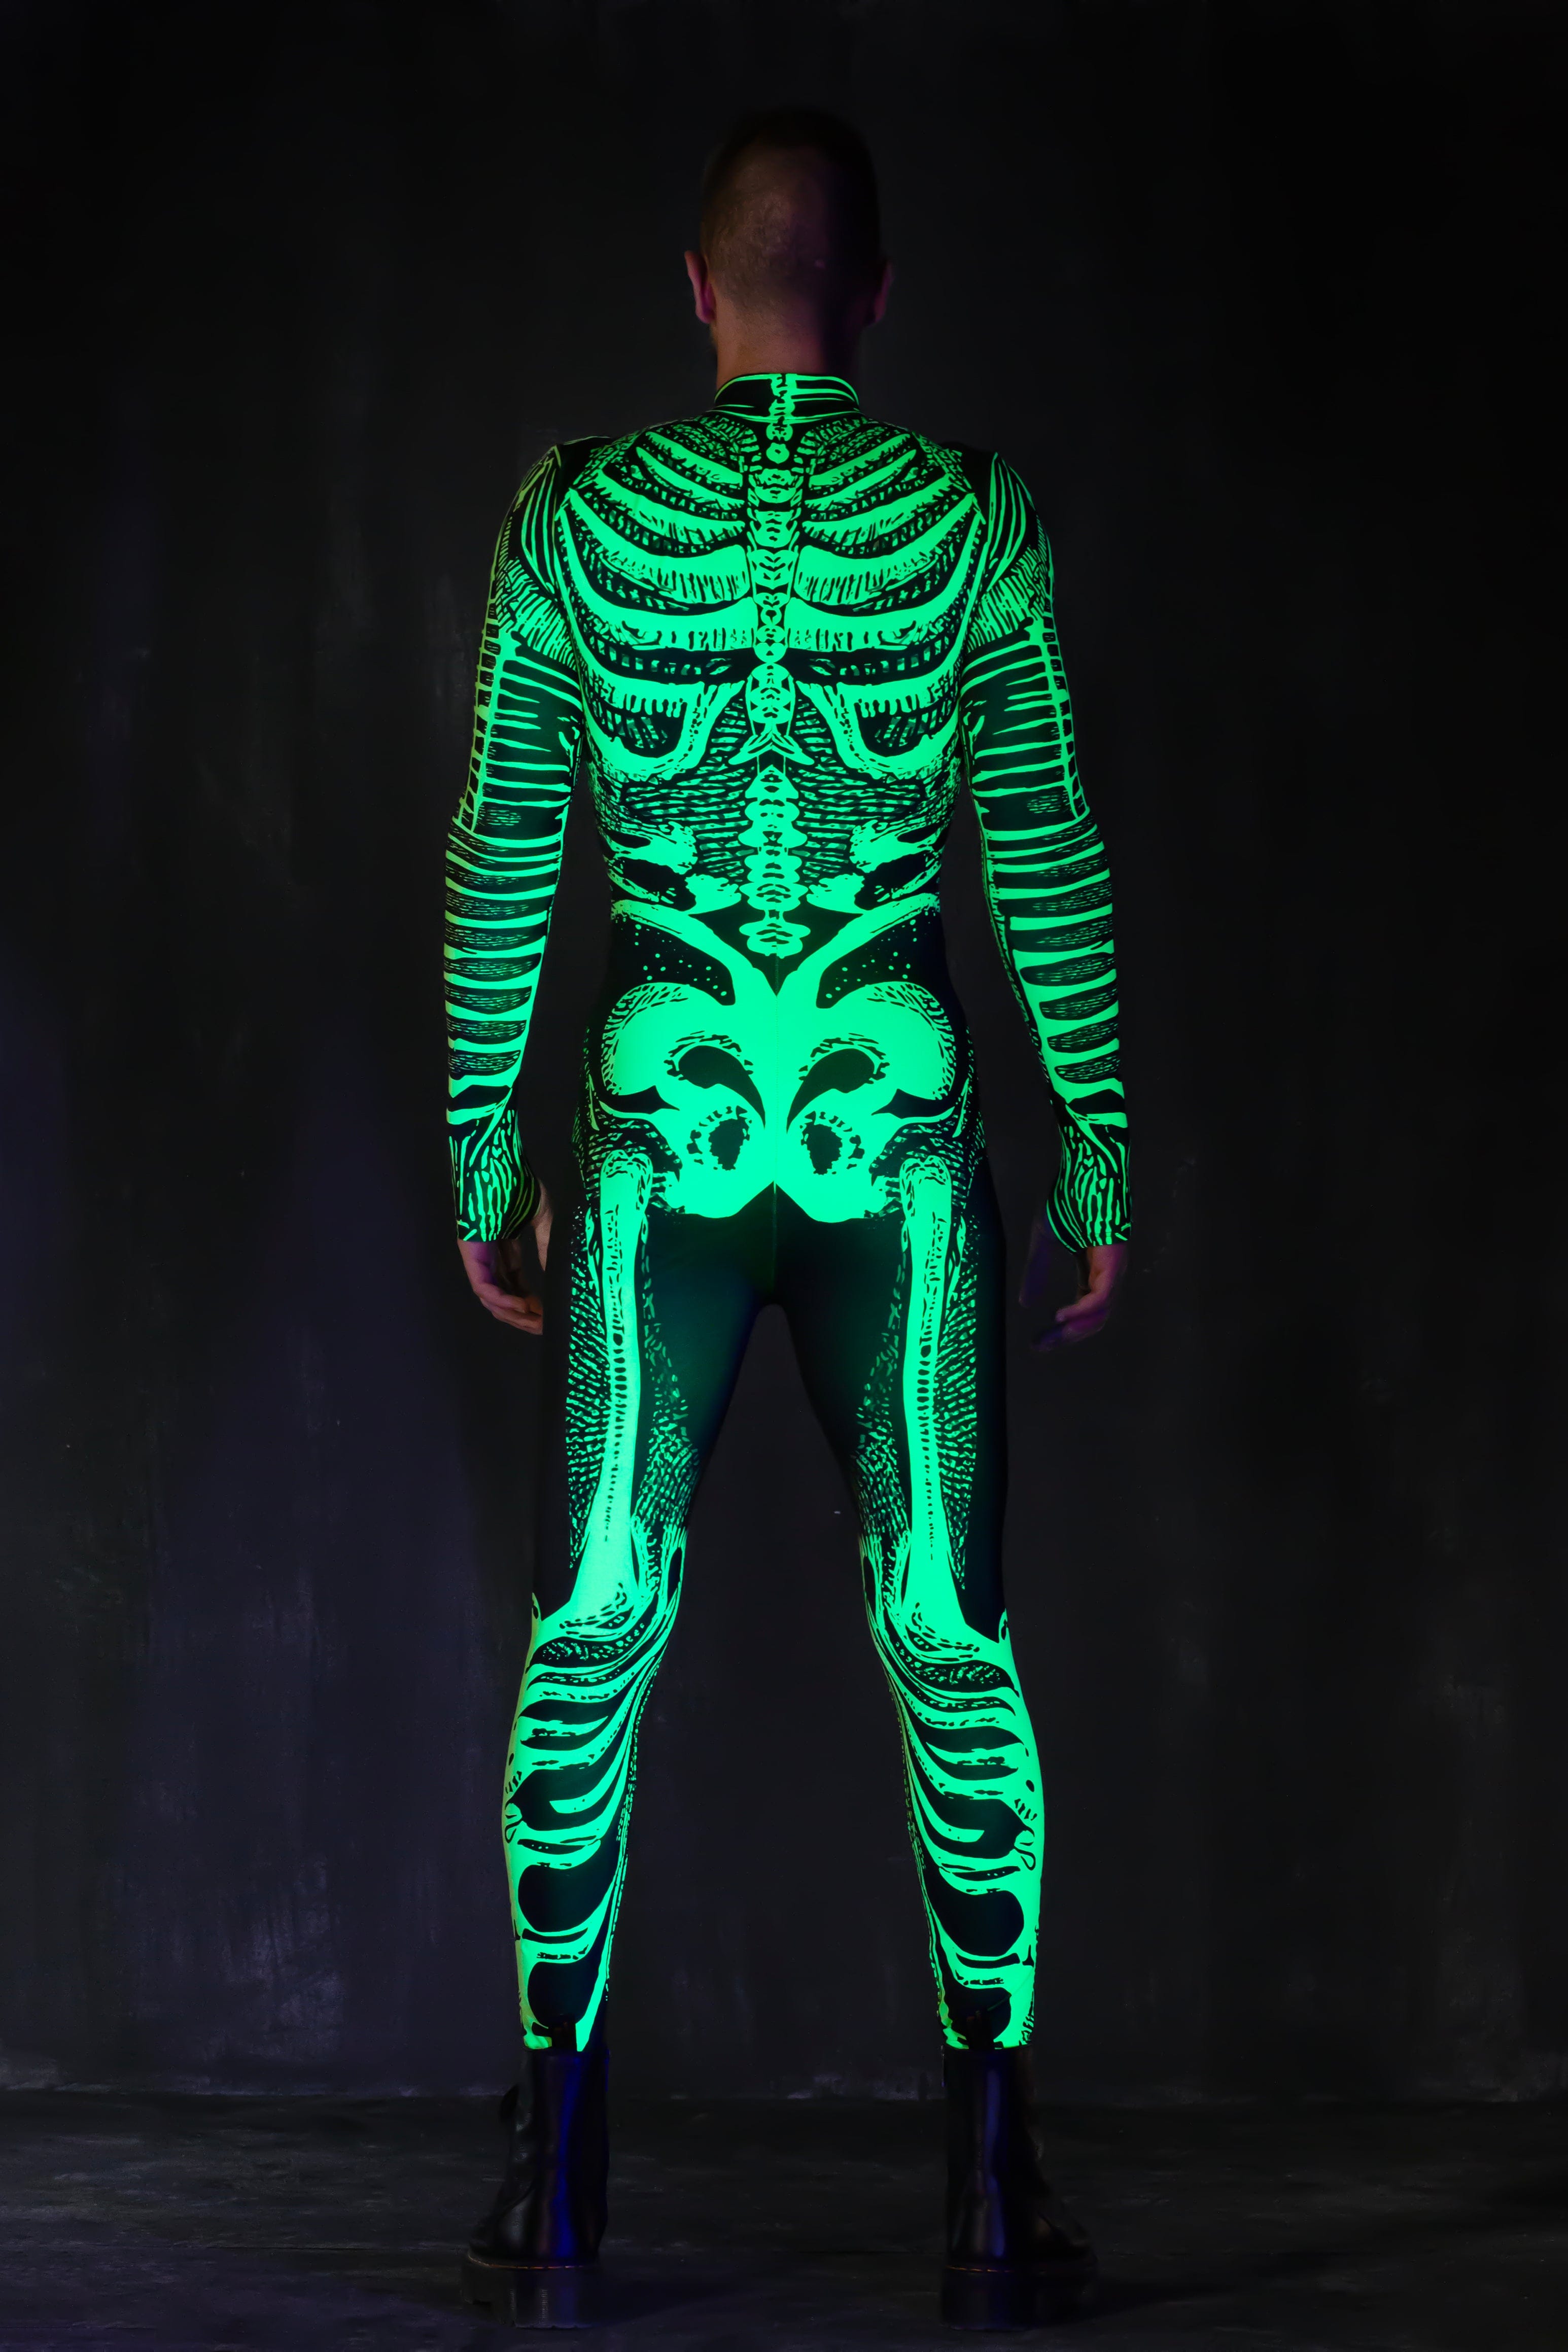 Inhuman Green Male Costume